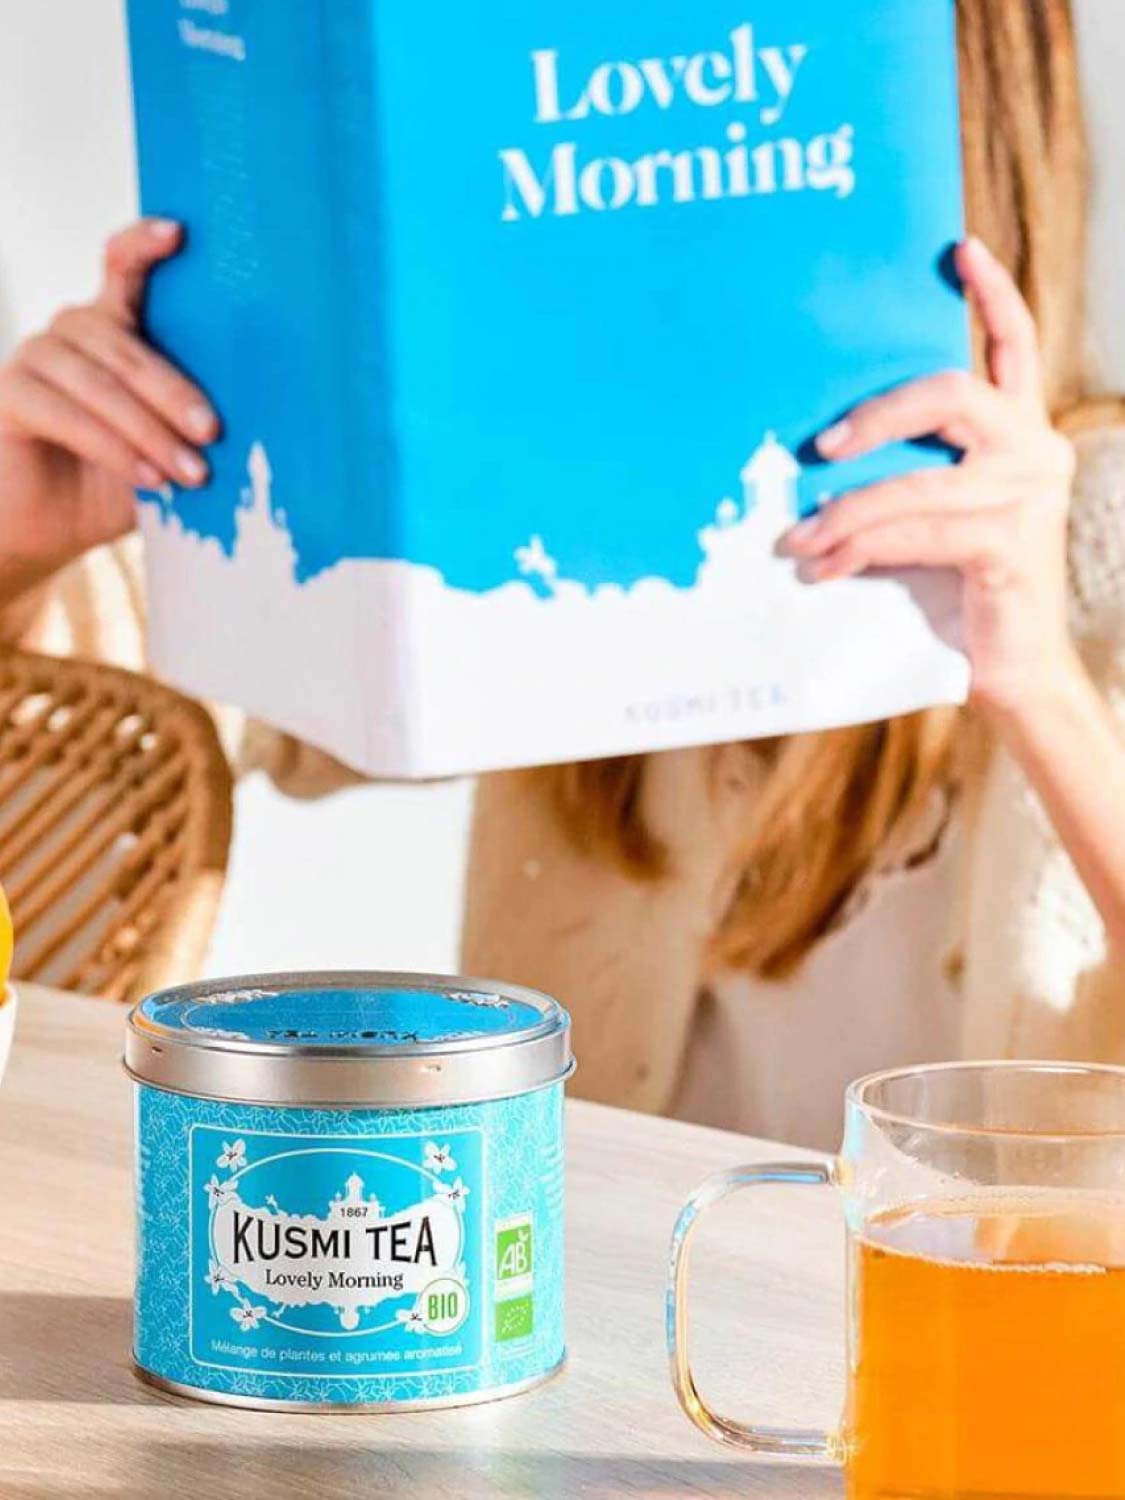 Kusmi Tea Paris - ❤ Premium Luxury Teas - BLUE DETOX - 125 tea bags BULK  box